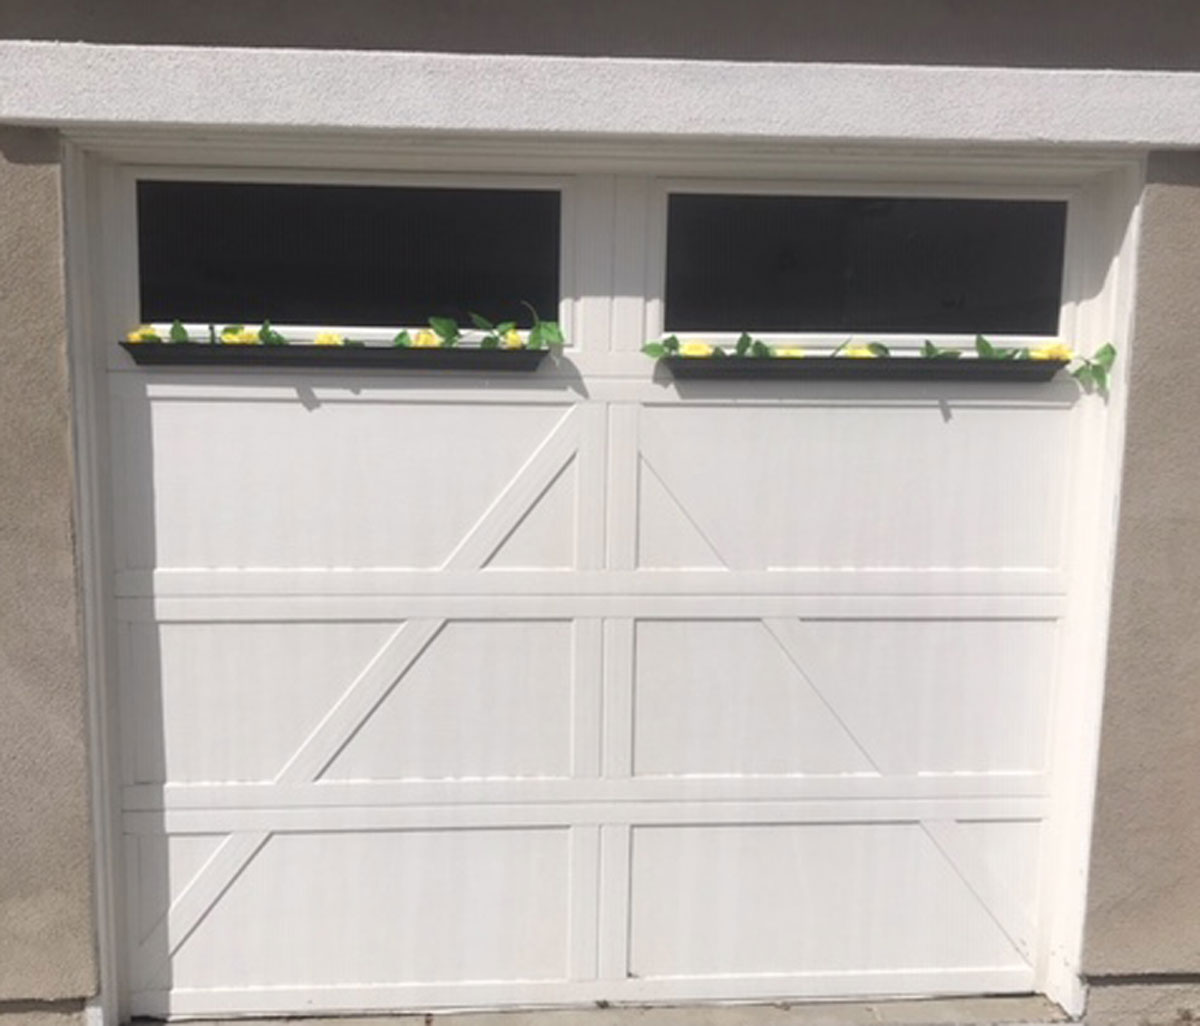 Unique Garage Products - Planter Box Door Décor - Yellow